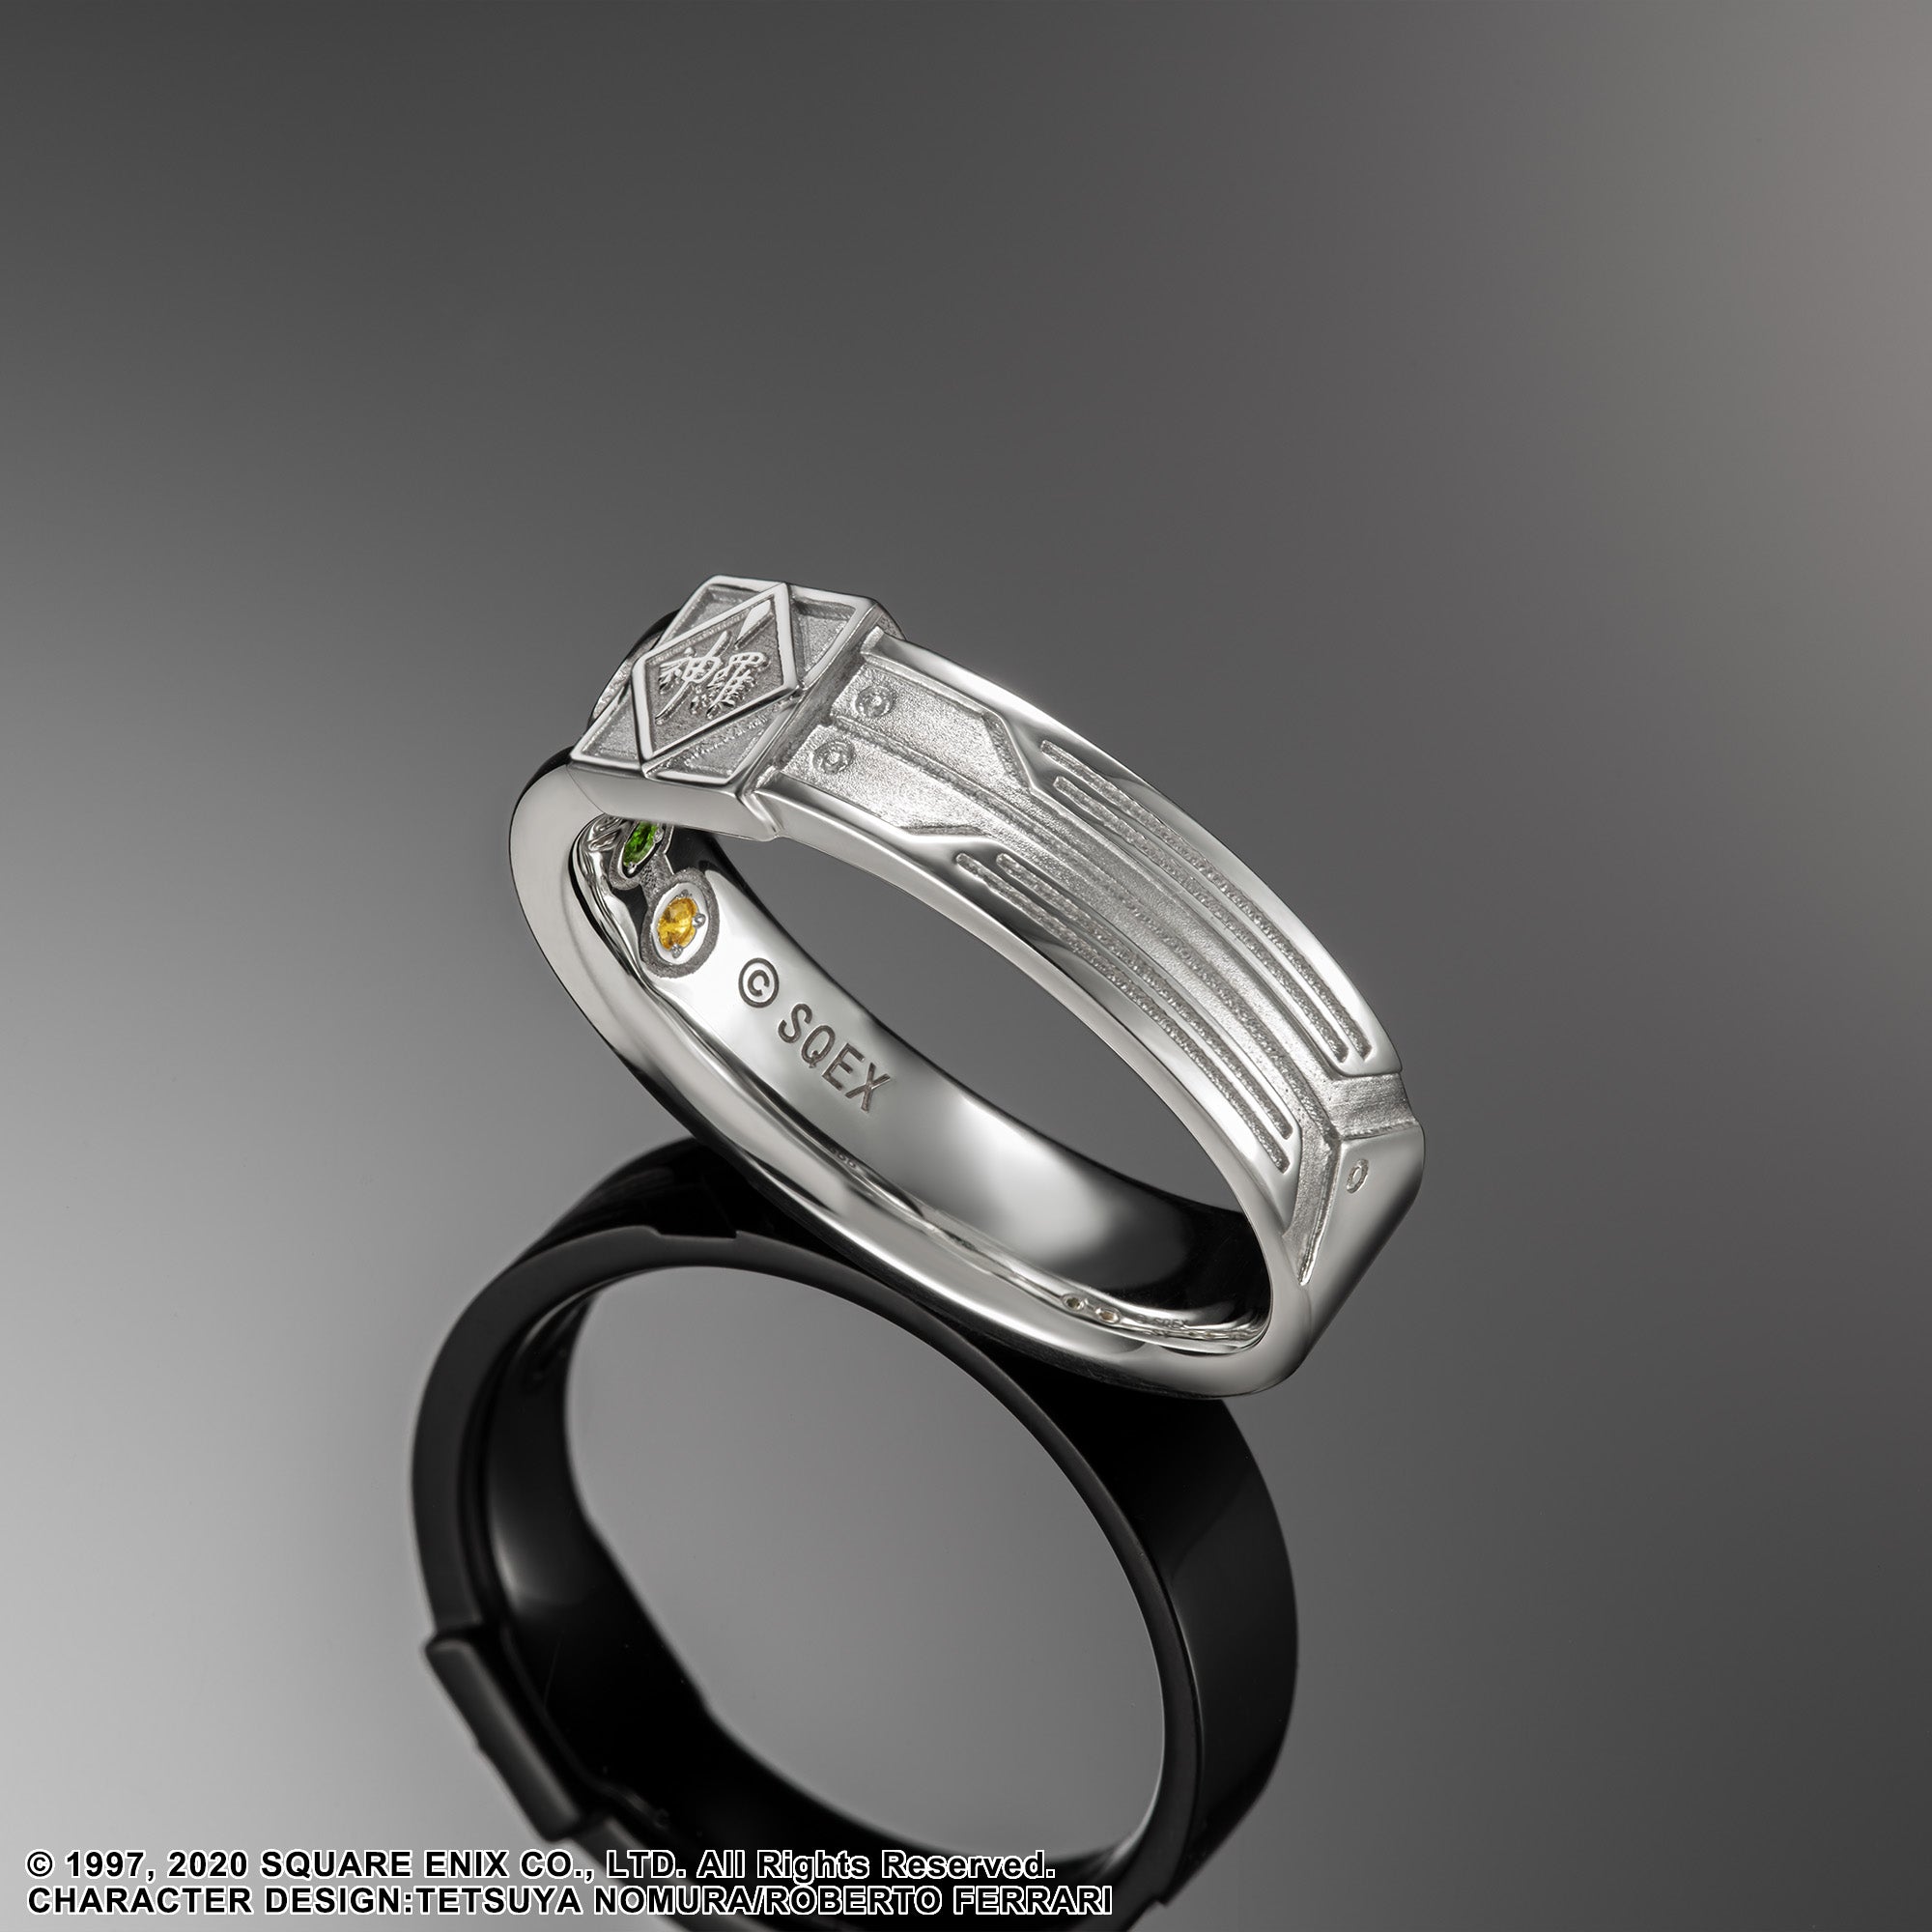 FINAL FANTASY VII Silver Ring SHINRA MATERIA TYPE A (Emerald + Blue Sapphire) Size 15